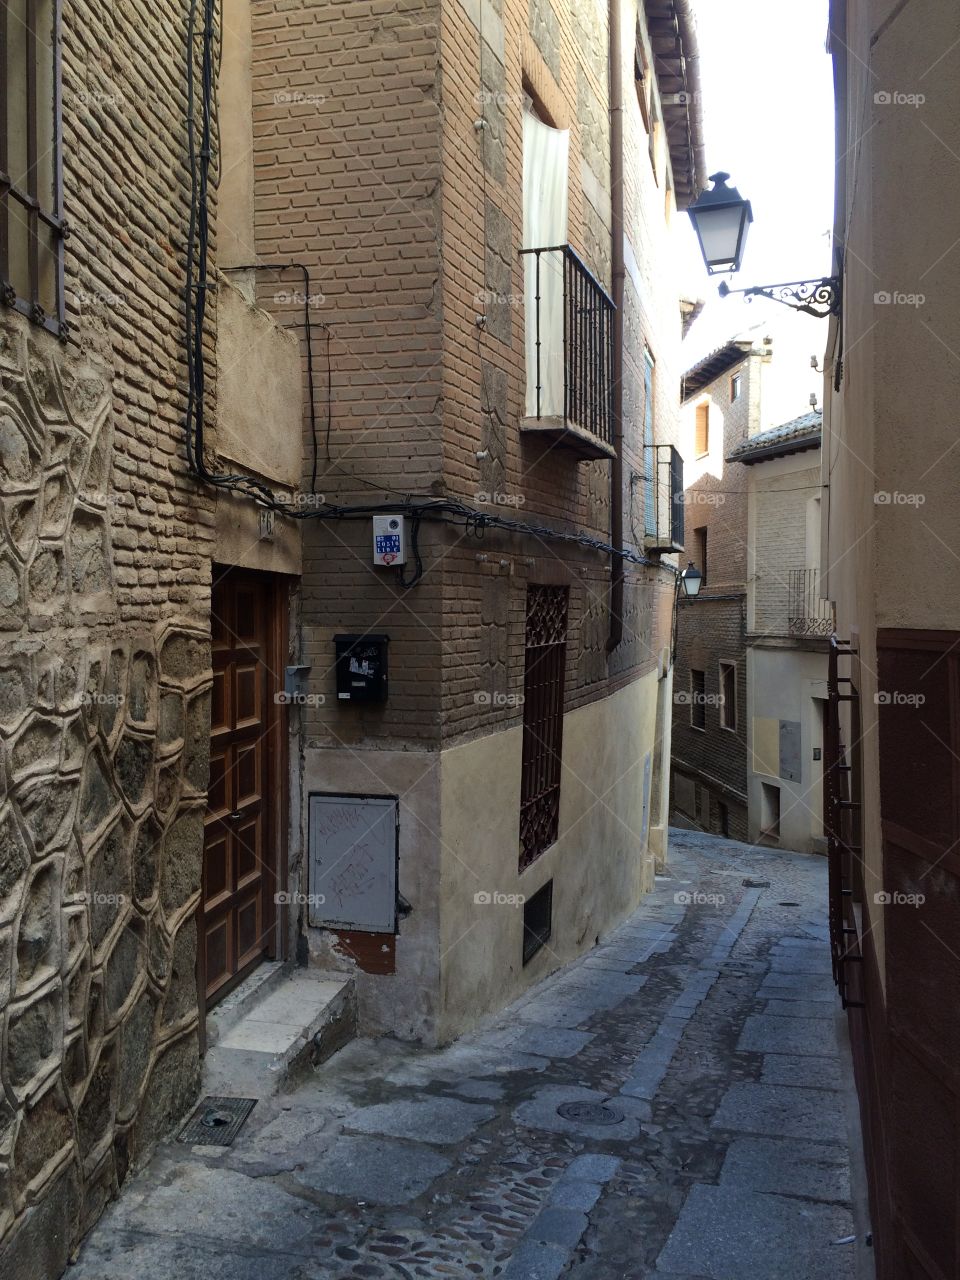 Getting lost in Toledo, Spain